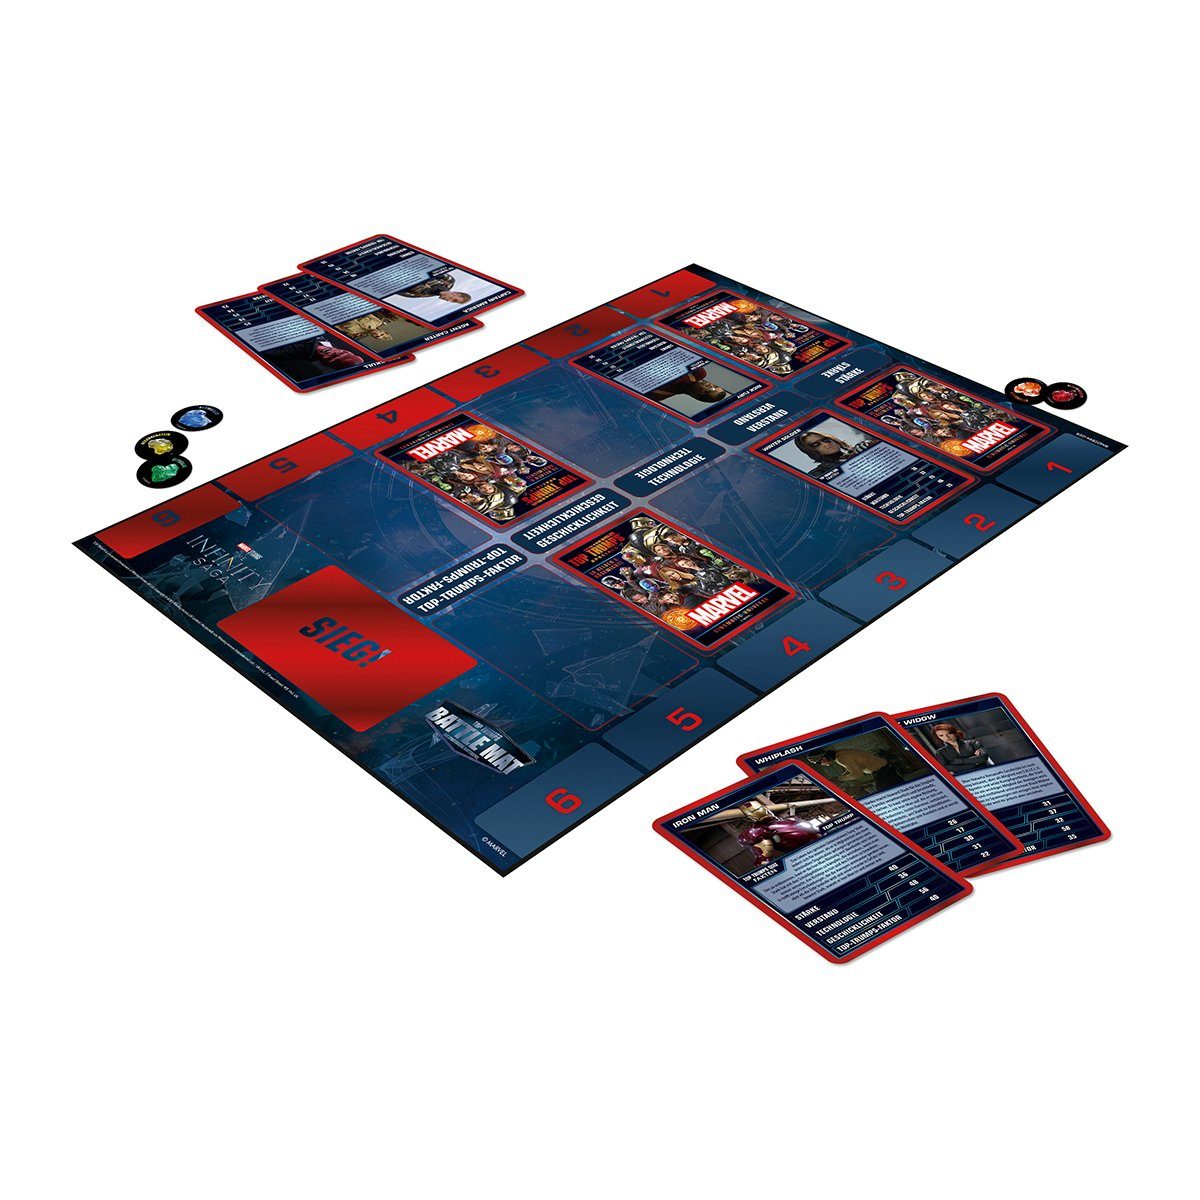 Marvel Spiel, inkl. Battle Trumps Kartenspiel - Top Mat Moves Winning